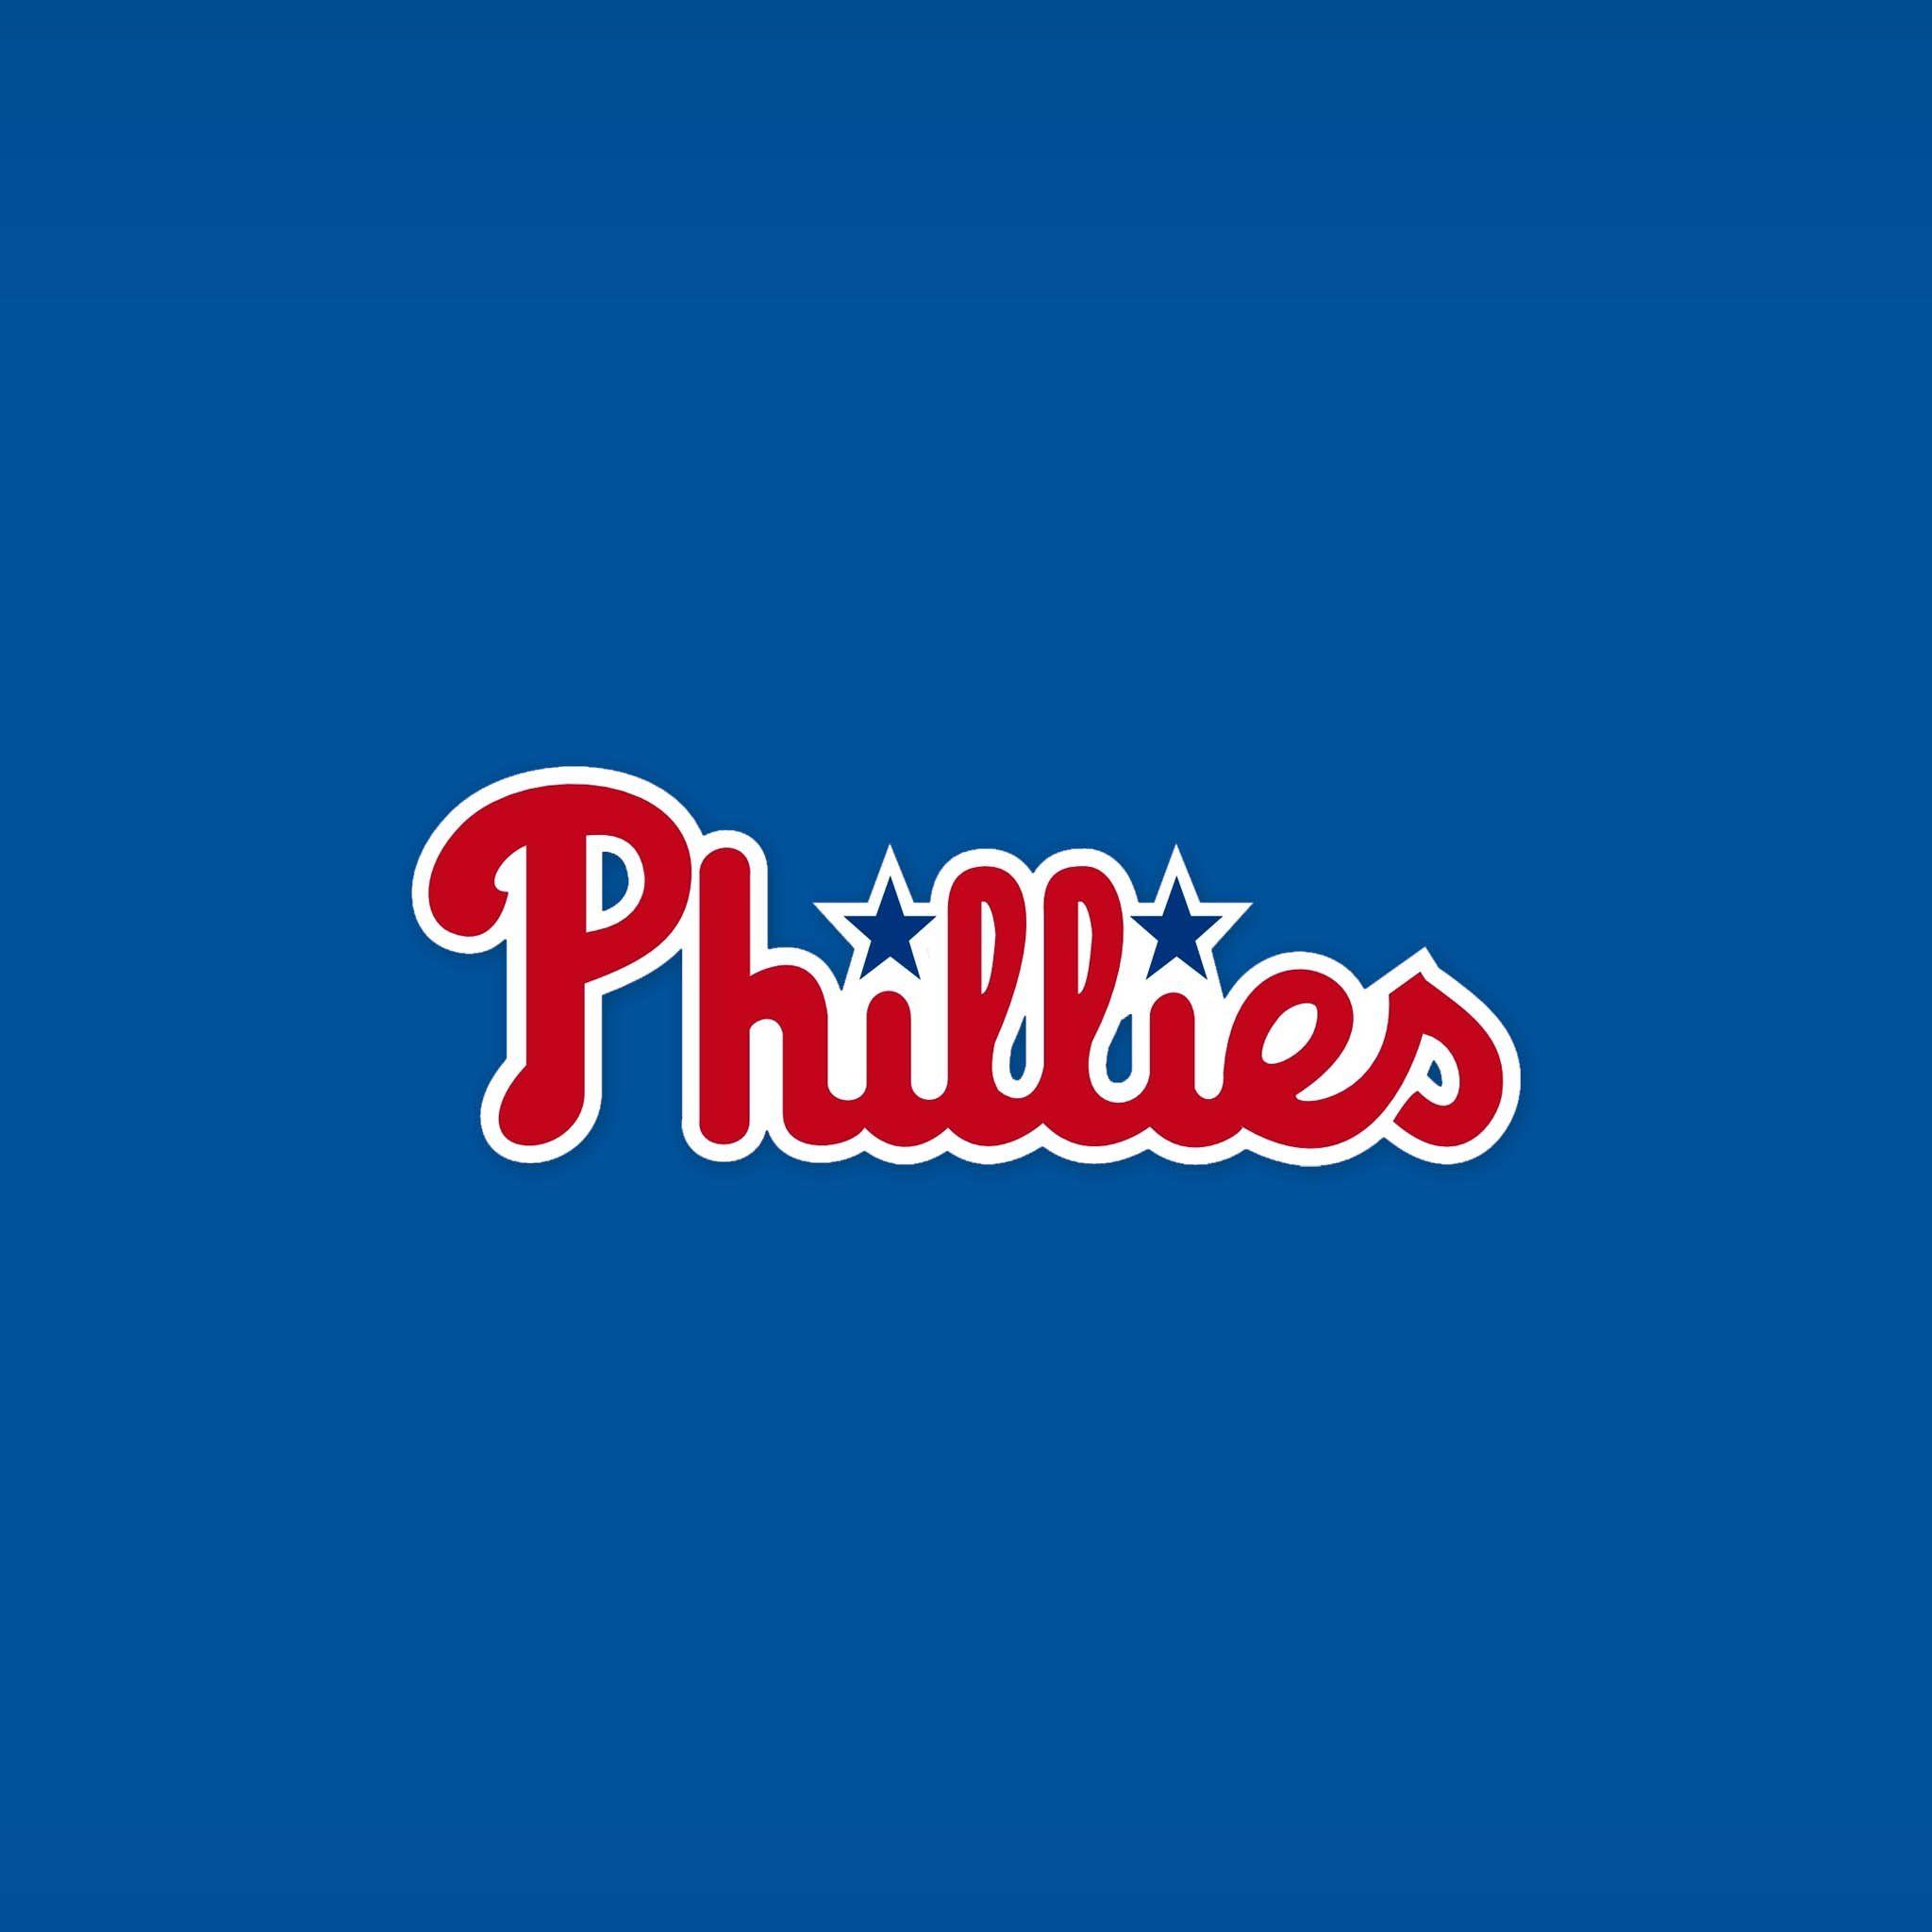 Philadelphia Phillies Image. Shining Stuff Wallparers